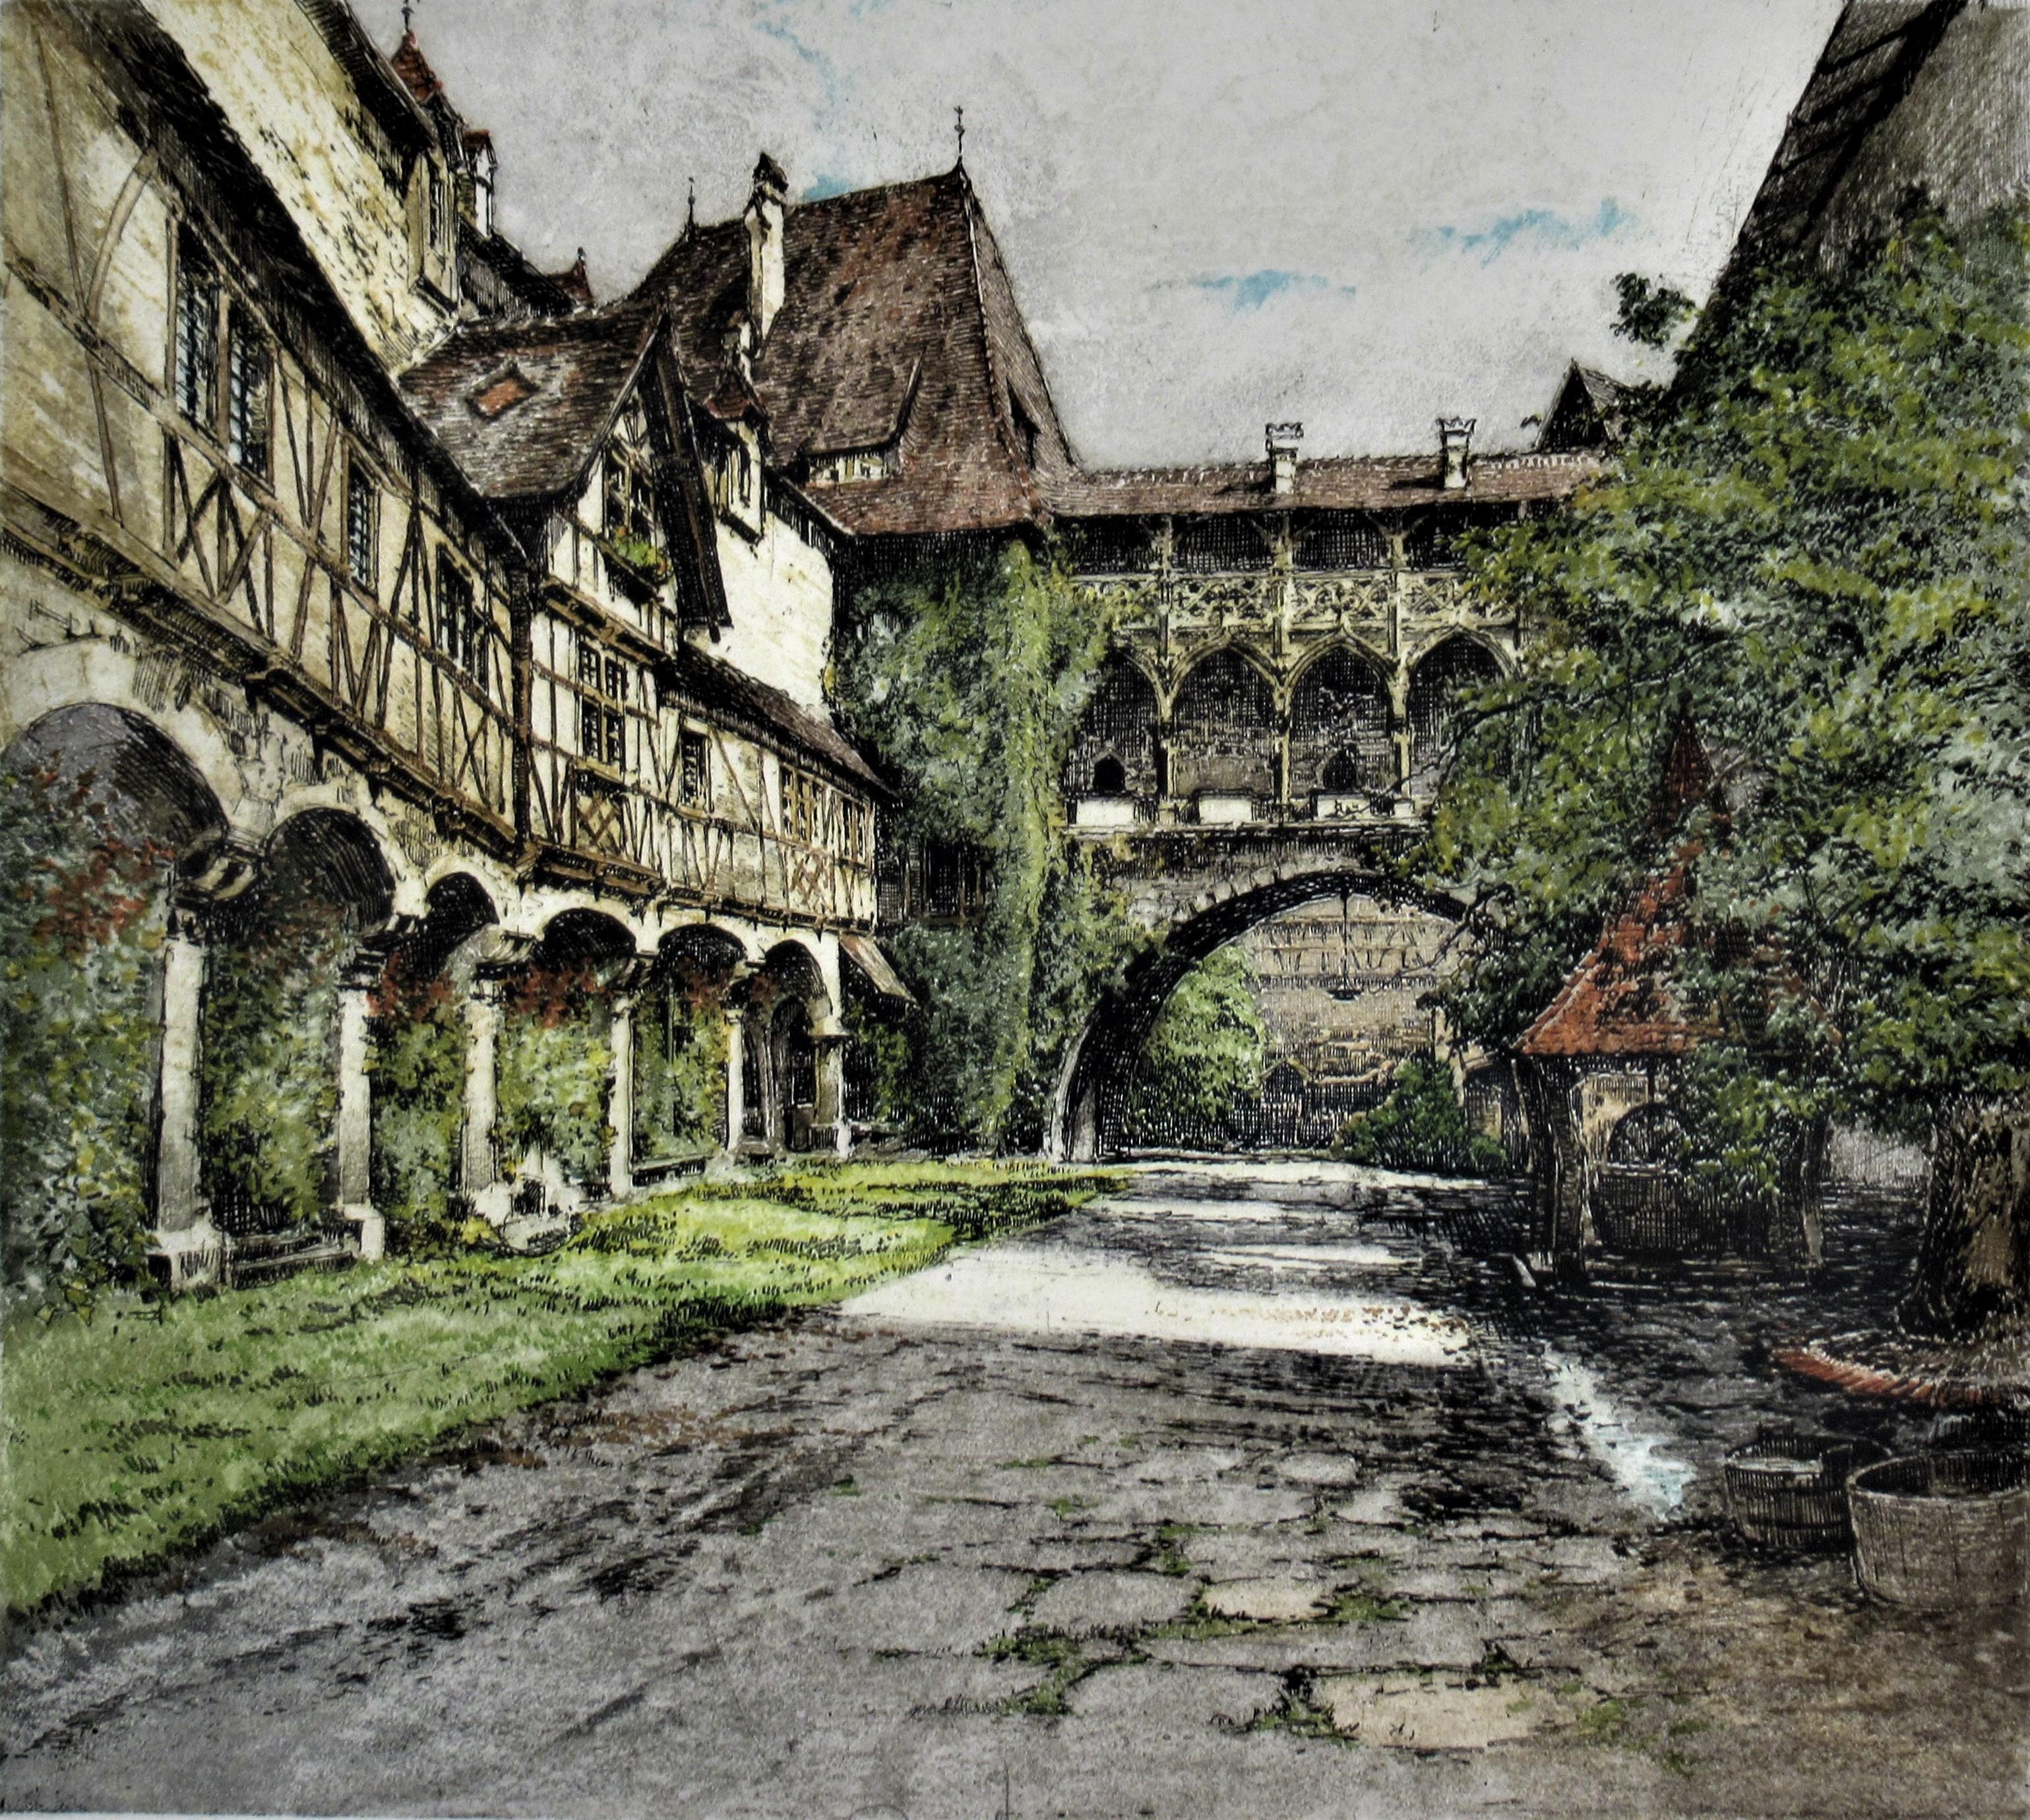 Kreuzenstein Courtyard, Austria - Print by Robert Kasimir